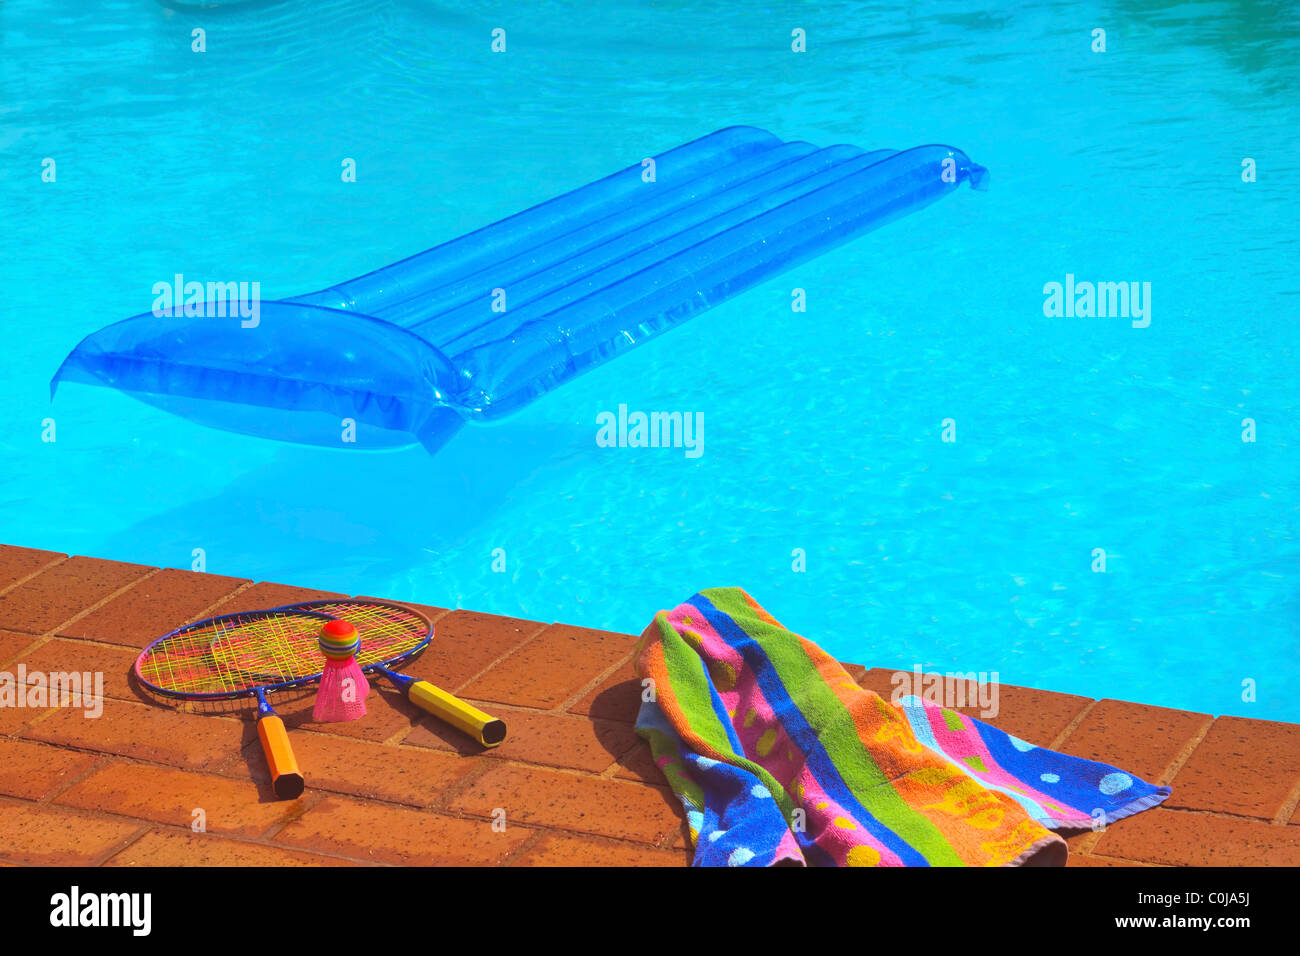 Piscina con lilo blu e un giardino badminton set. Foto Stock